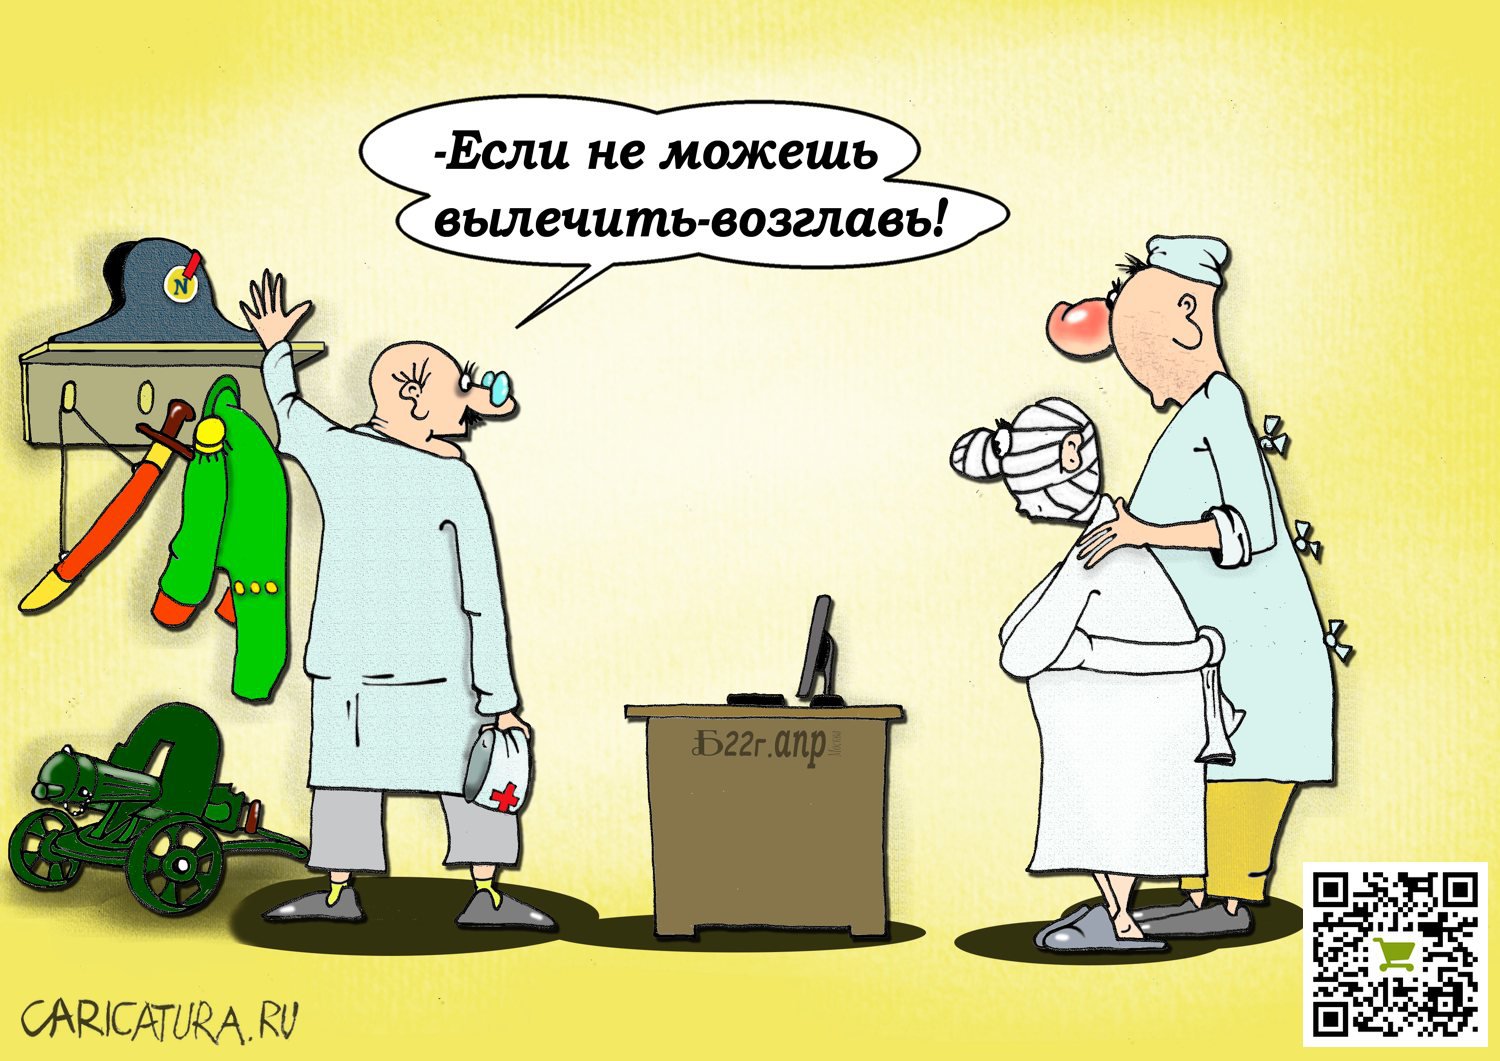 Карикатура "Про современное возглавление", Борис Демин